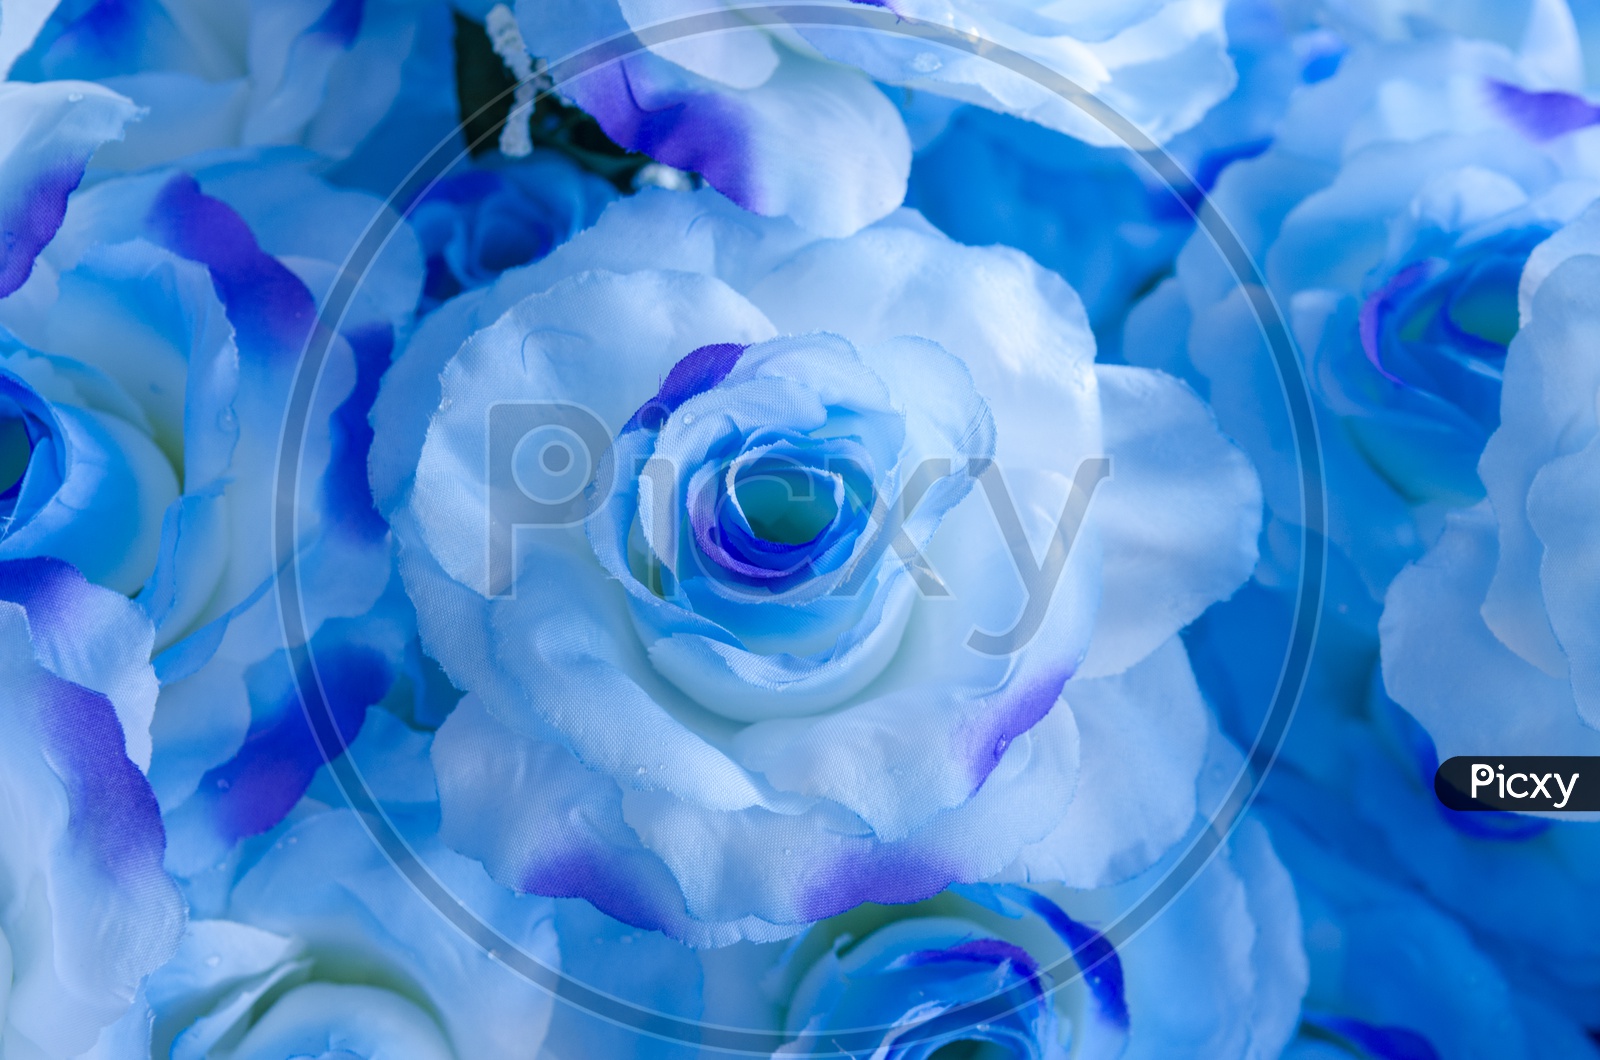 Blue rose flower background for Valentine's Day